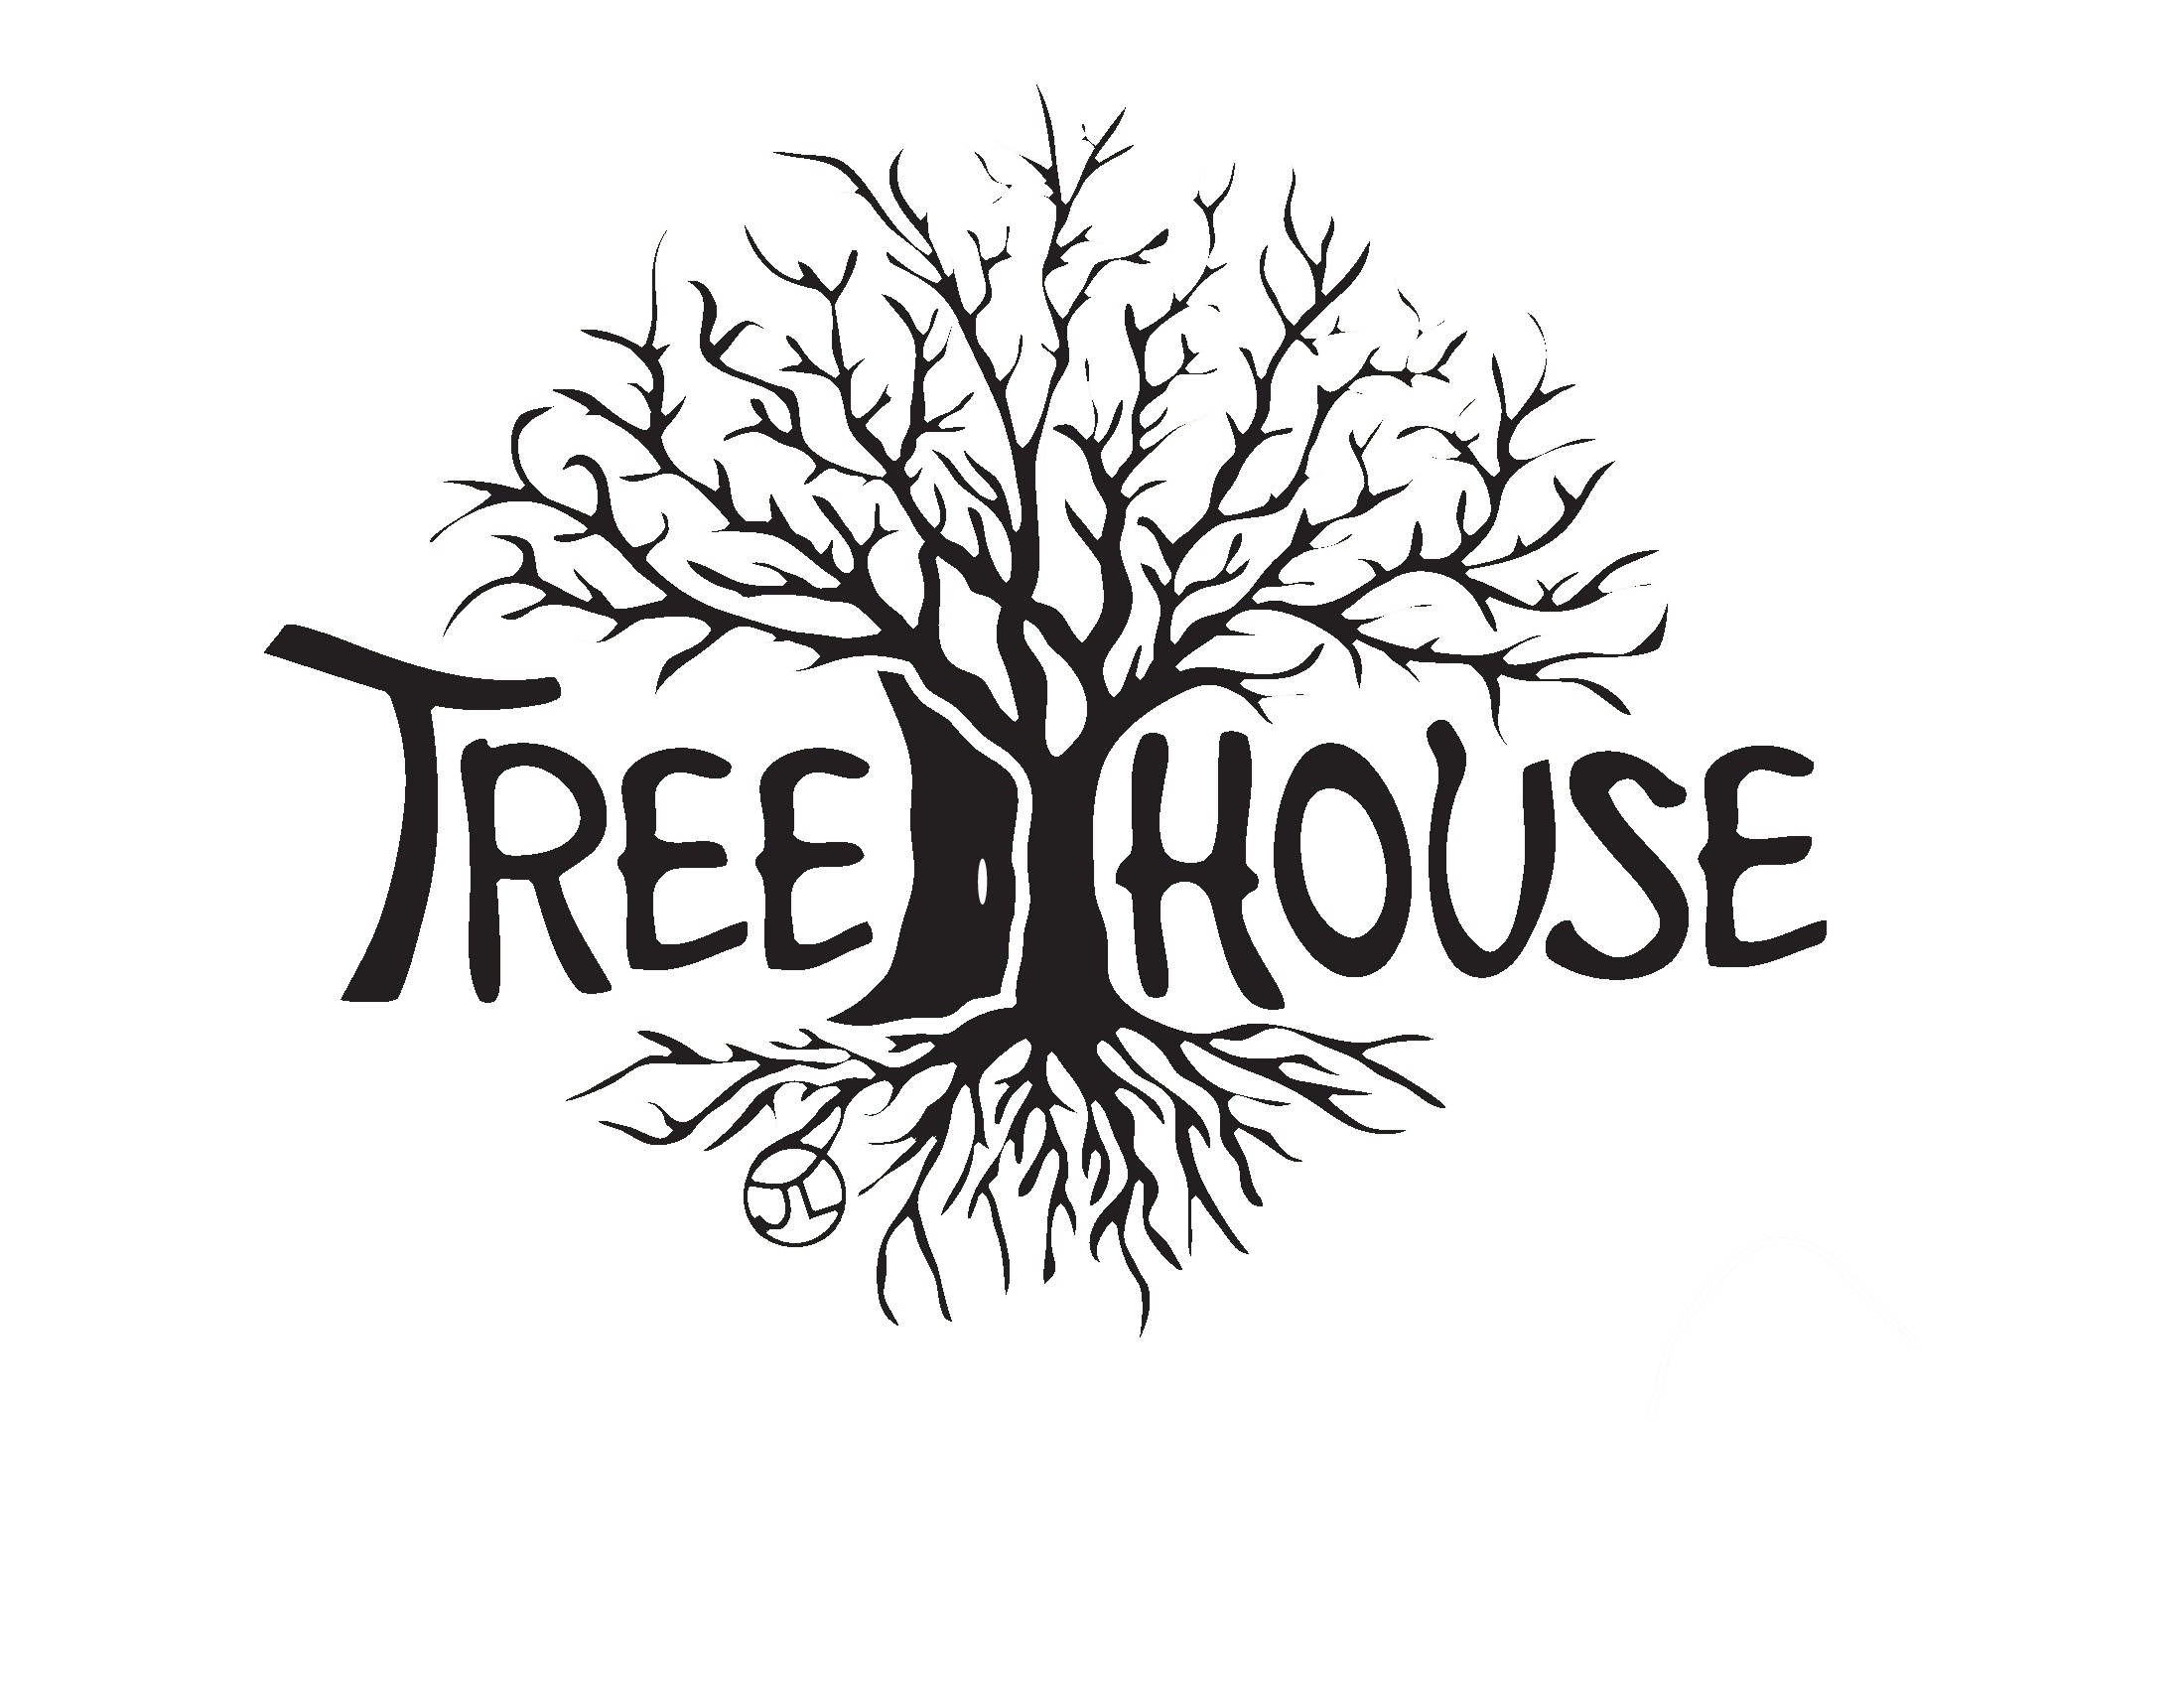 Sponsor Tree House